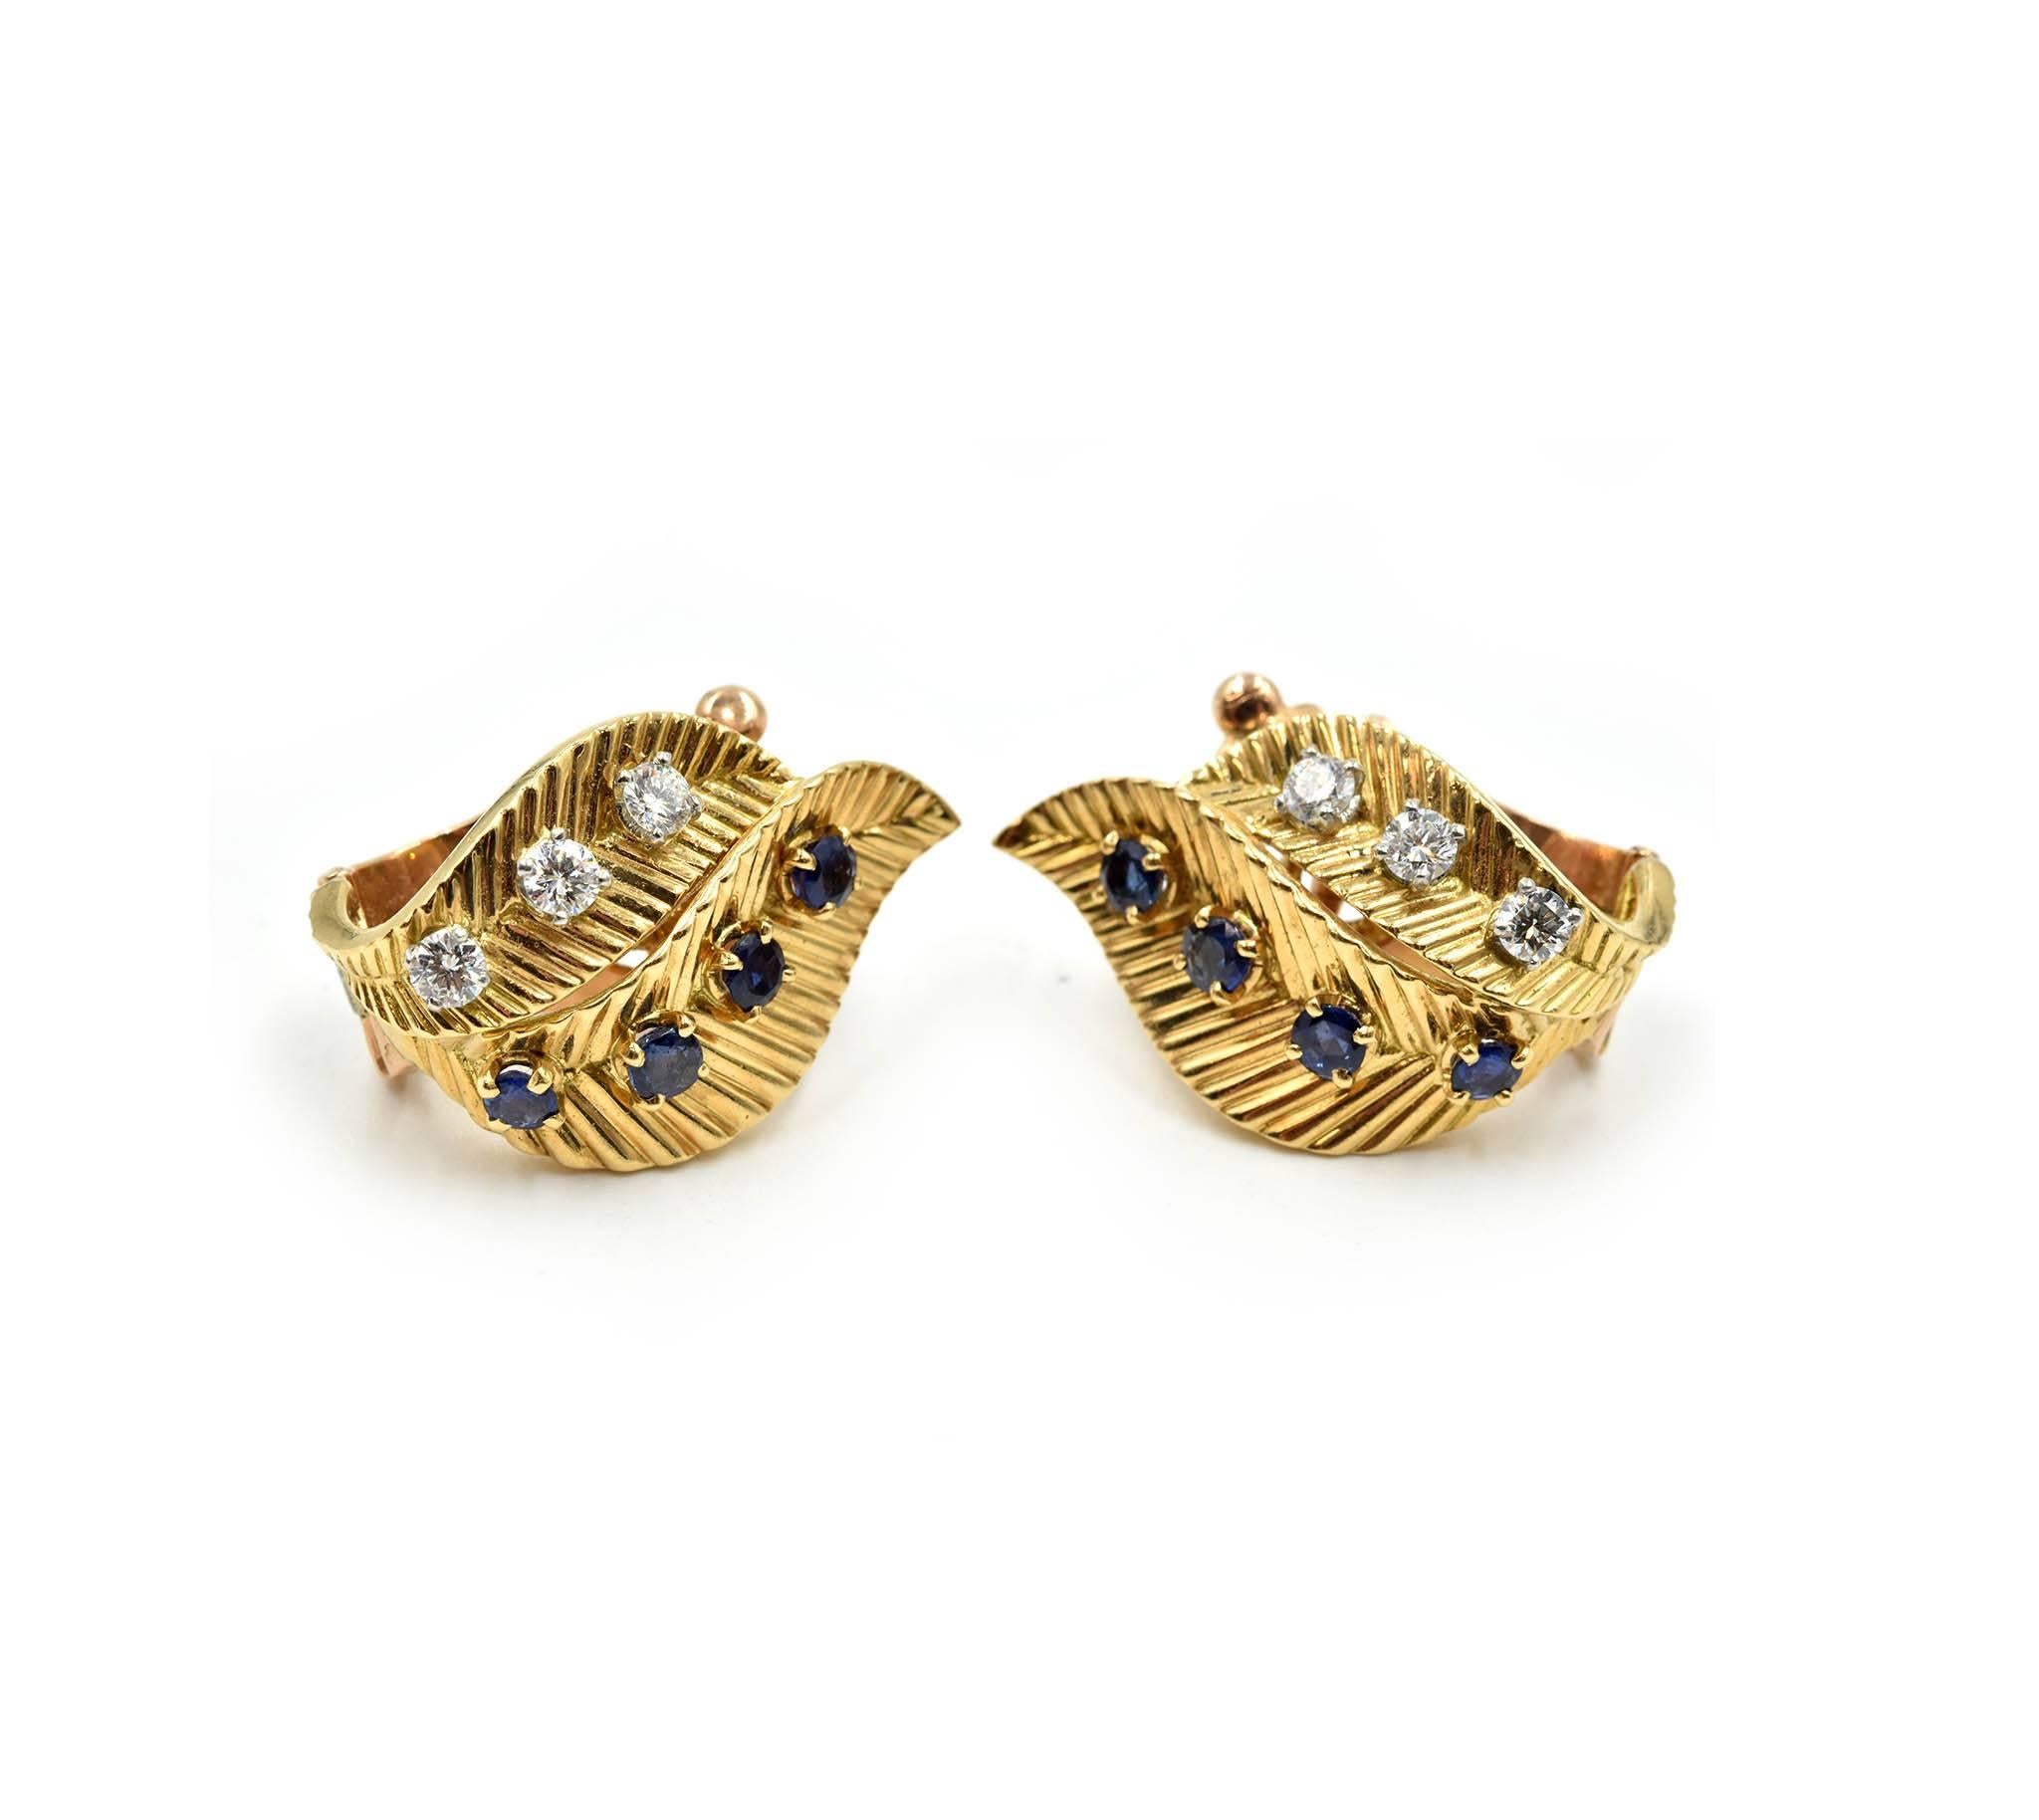 Round Cut Van Cleef & Arpels Diamond and Sapphire Earrings 18 Karat Yellow Gold